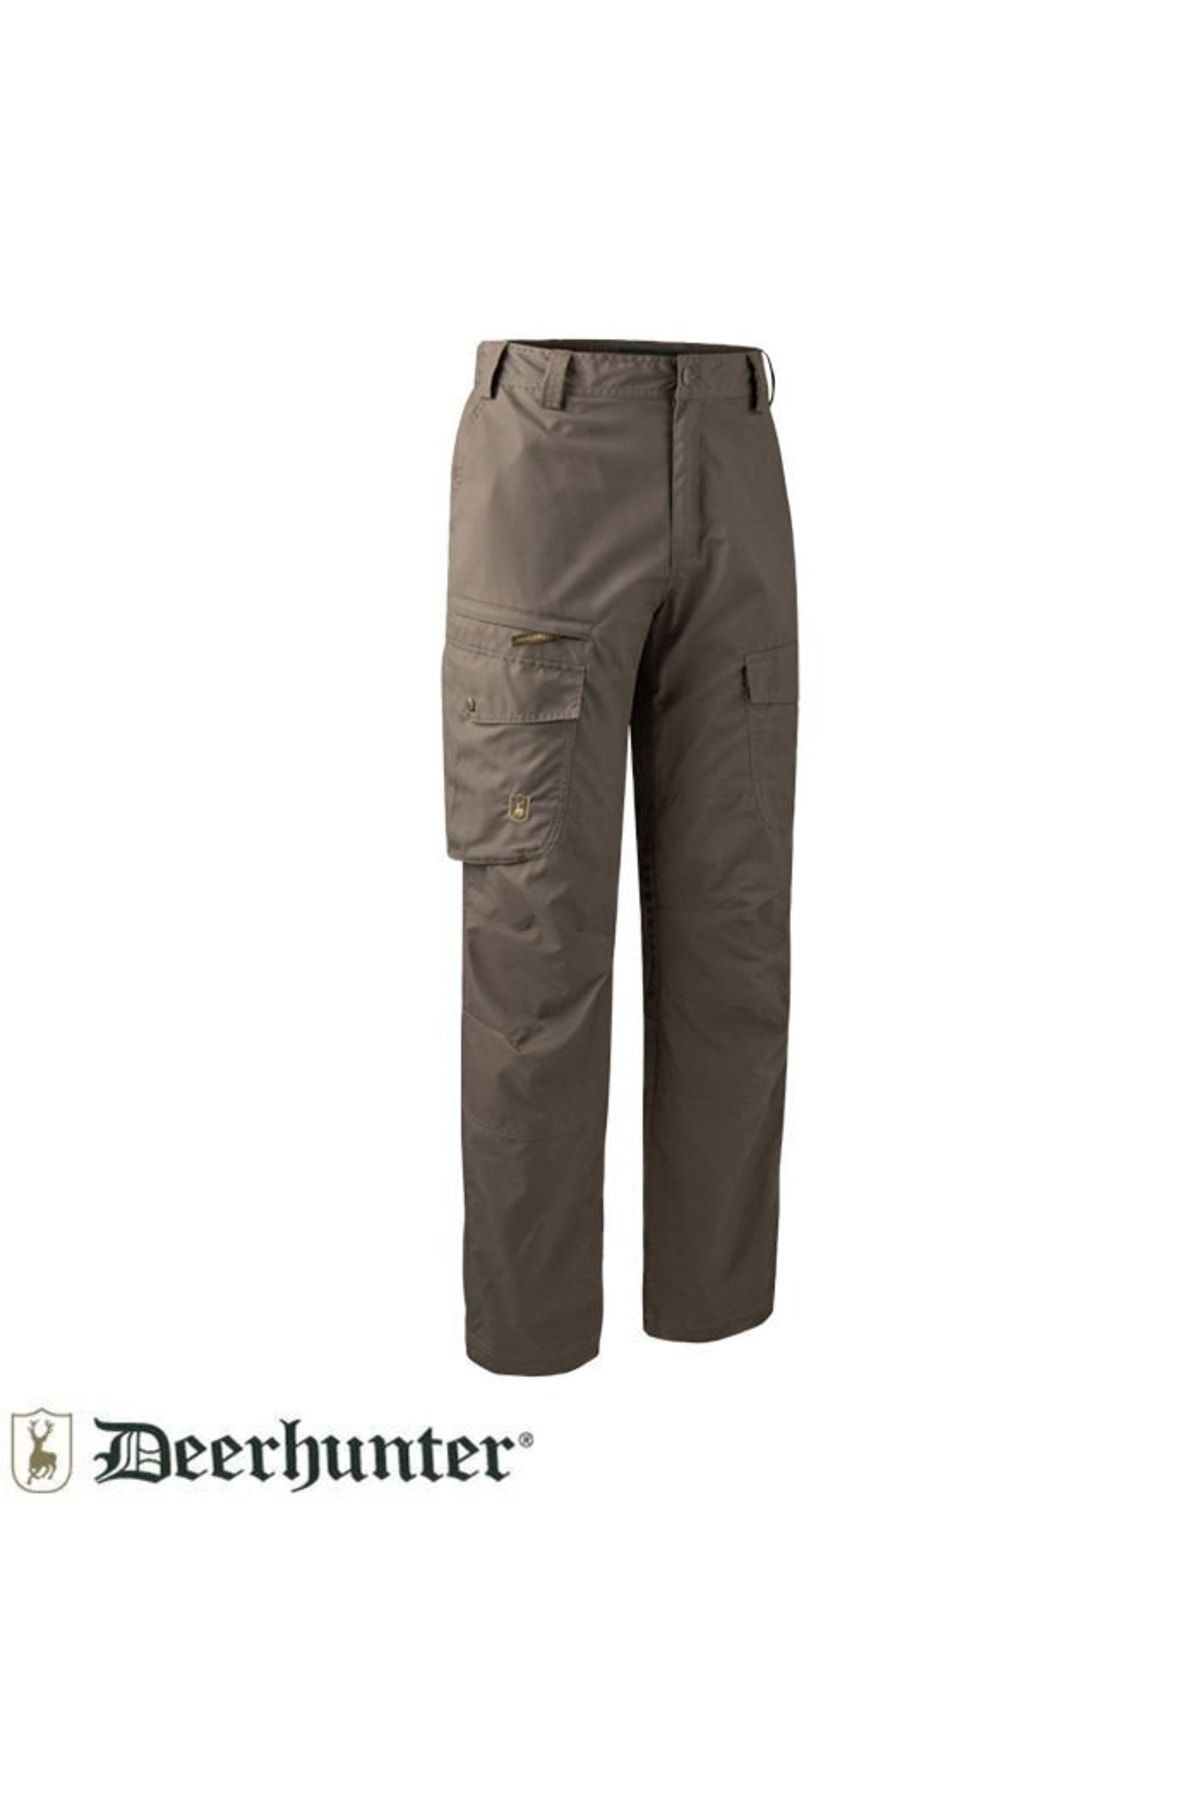 Deerhunter Lofoten Bark Pantolon 54